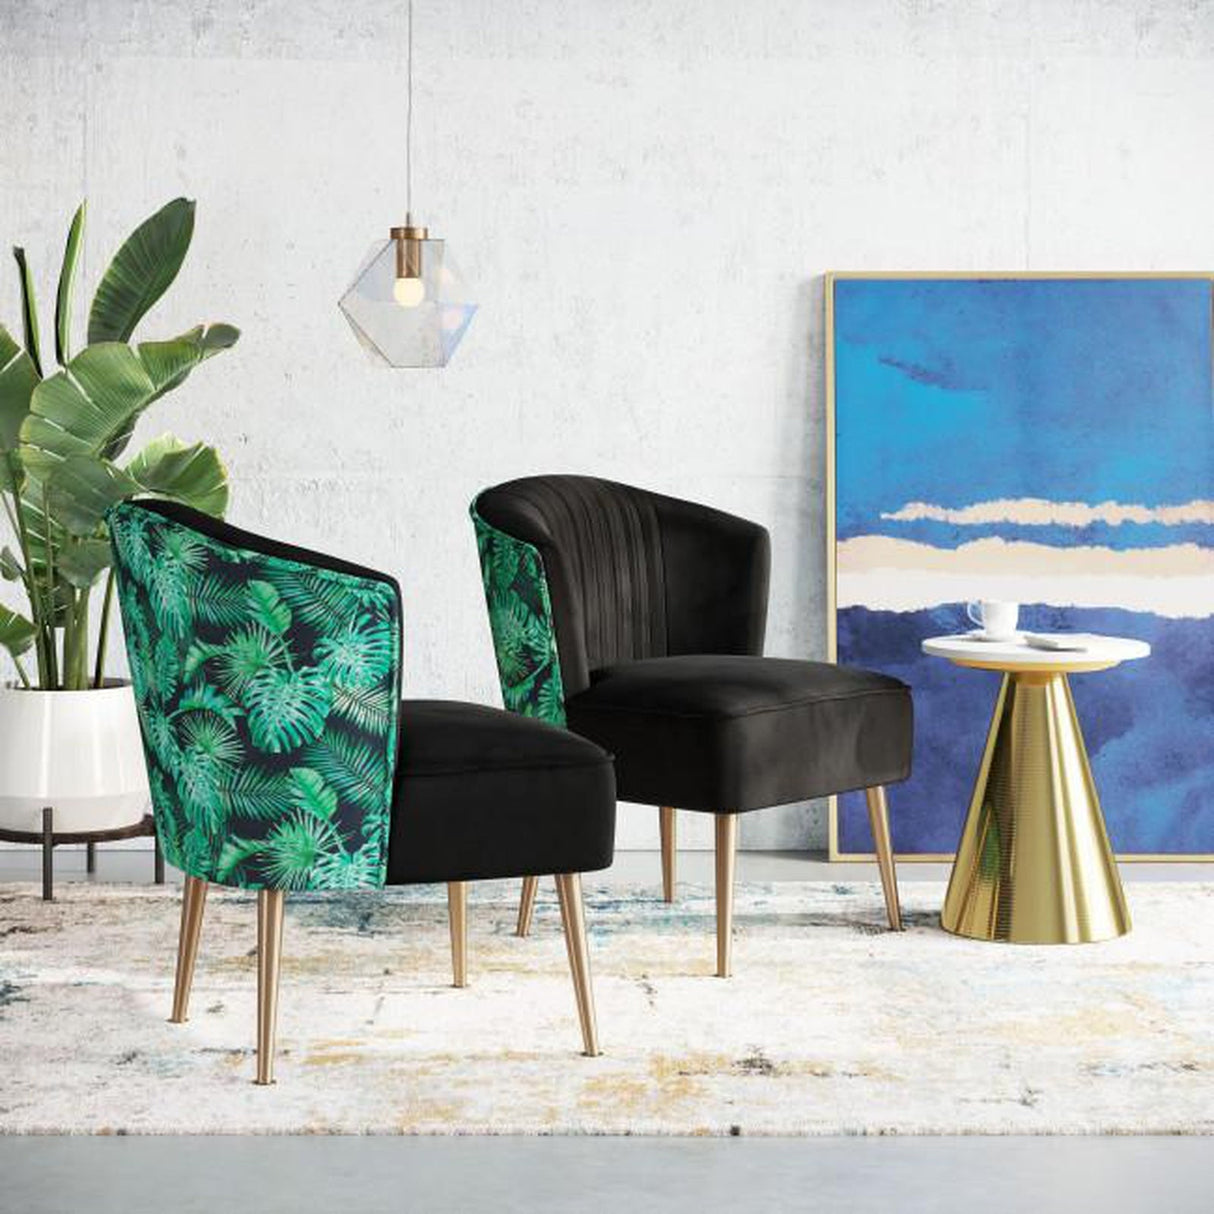 Zuo Tonya Accent Chair Black, Gold & Tropical Print